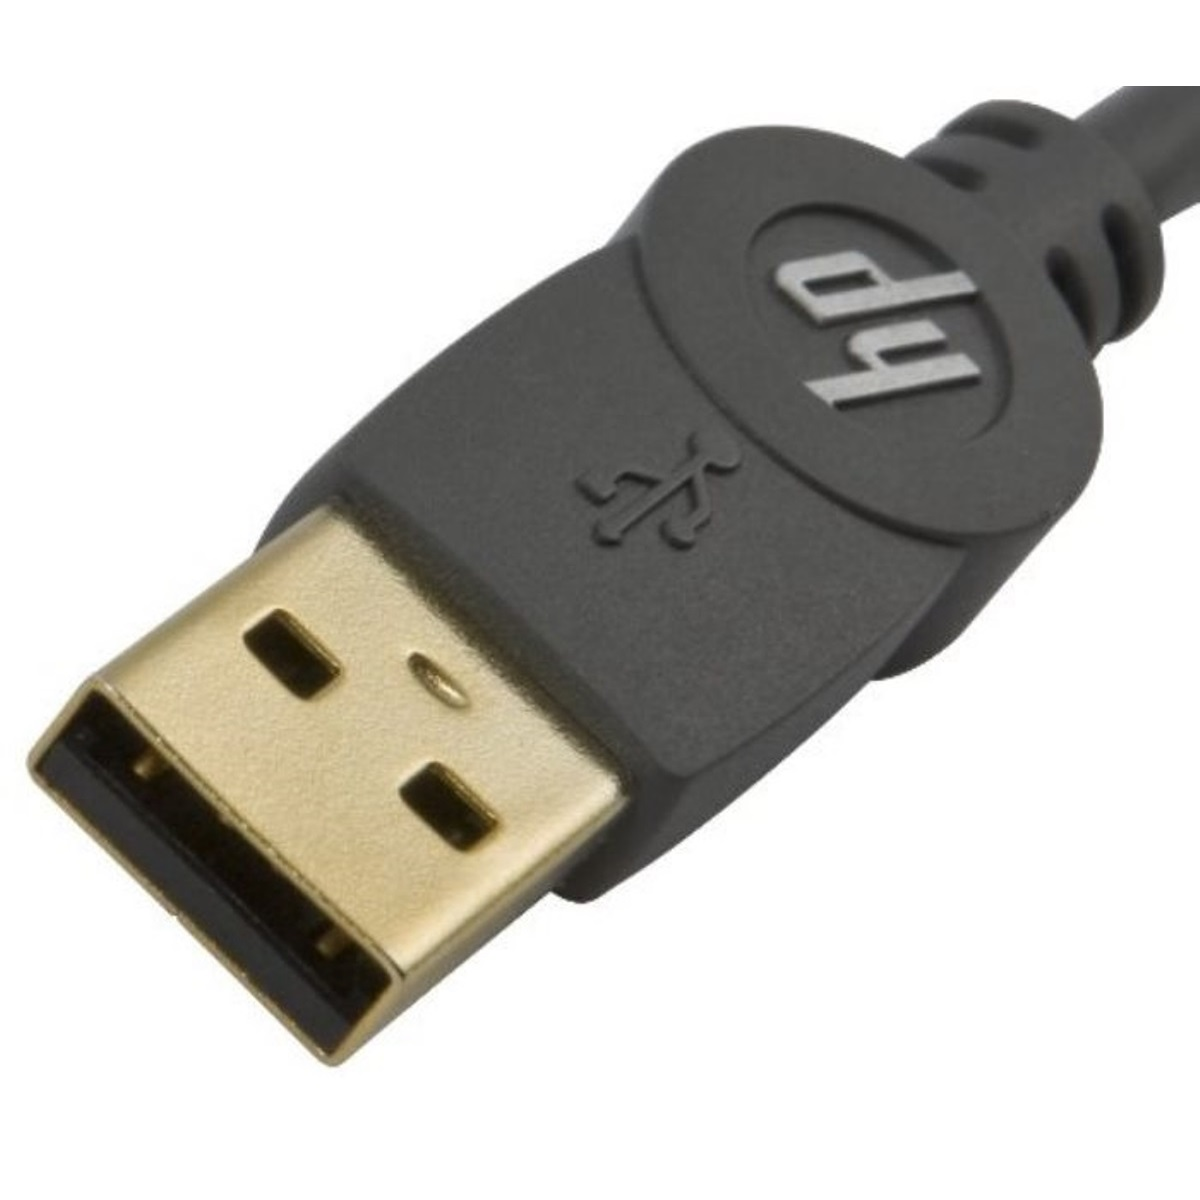 HP 0,9m CABLE Kabel, Mini-USB MONSTER Mini-USB-Kabel High-Speed Schwarz